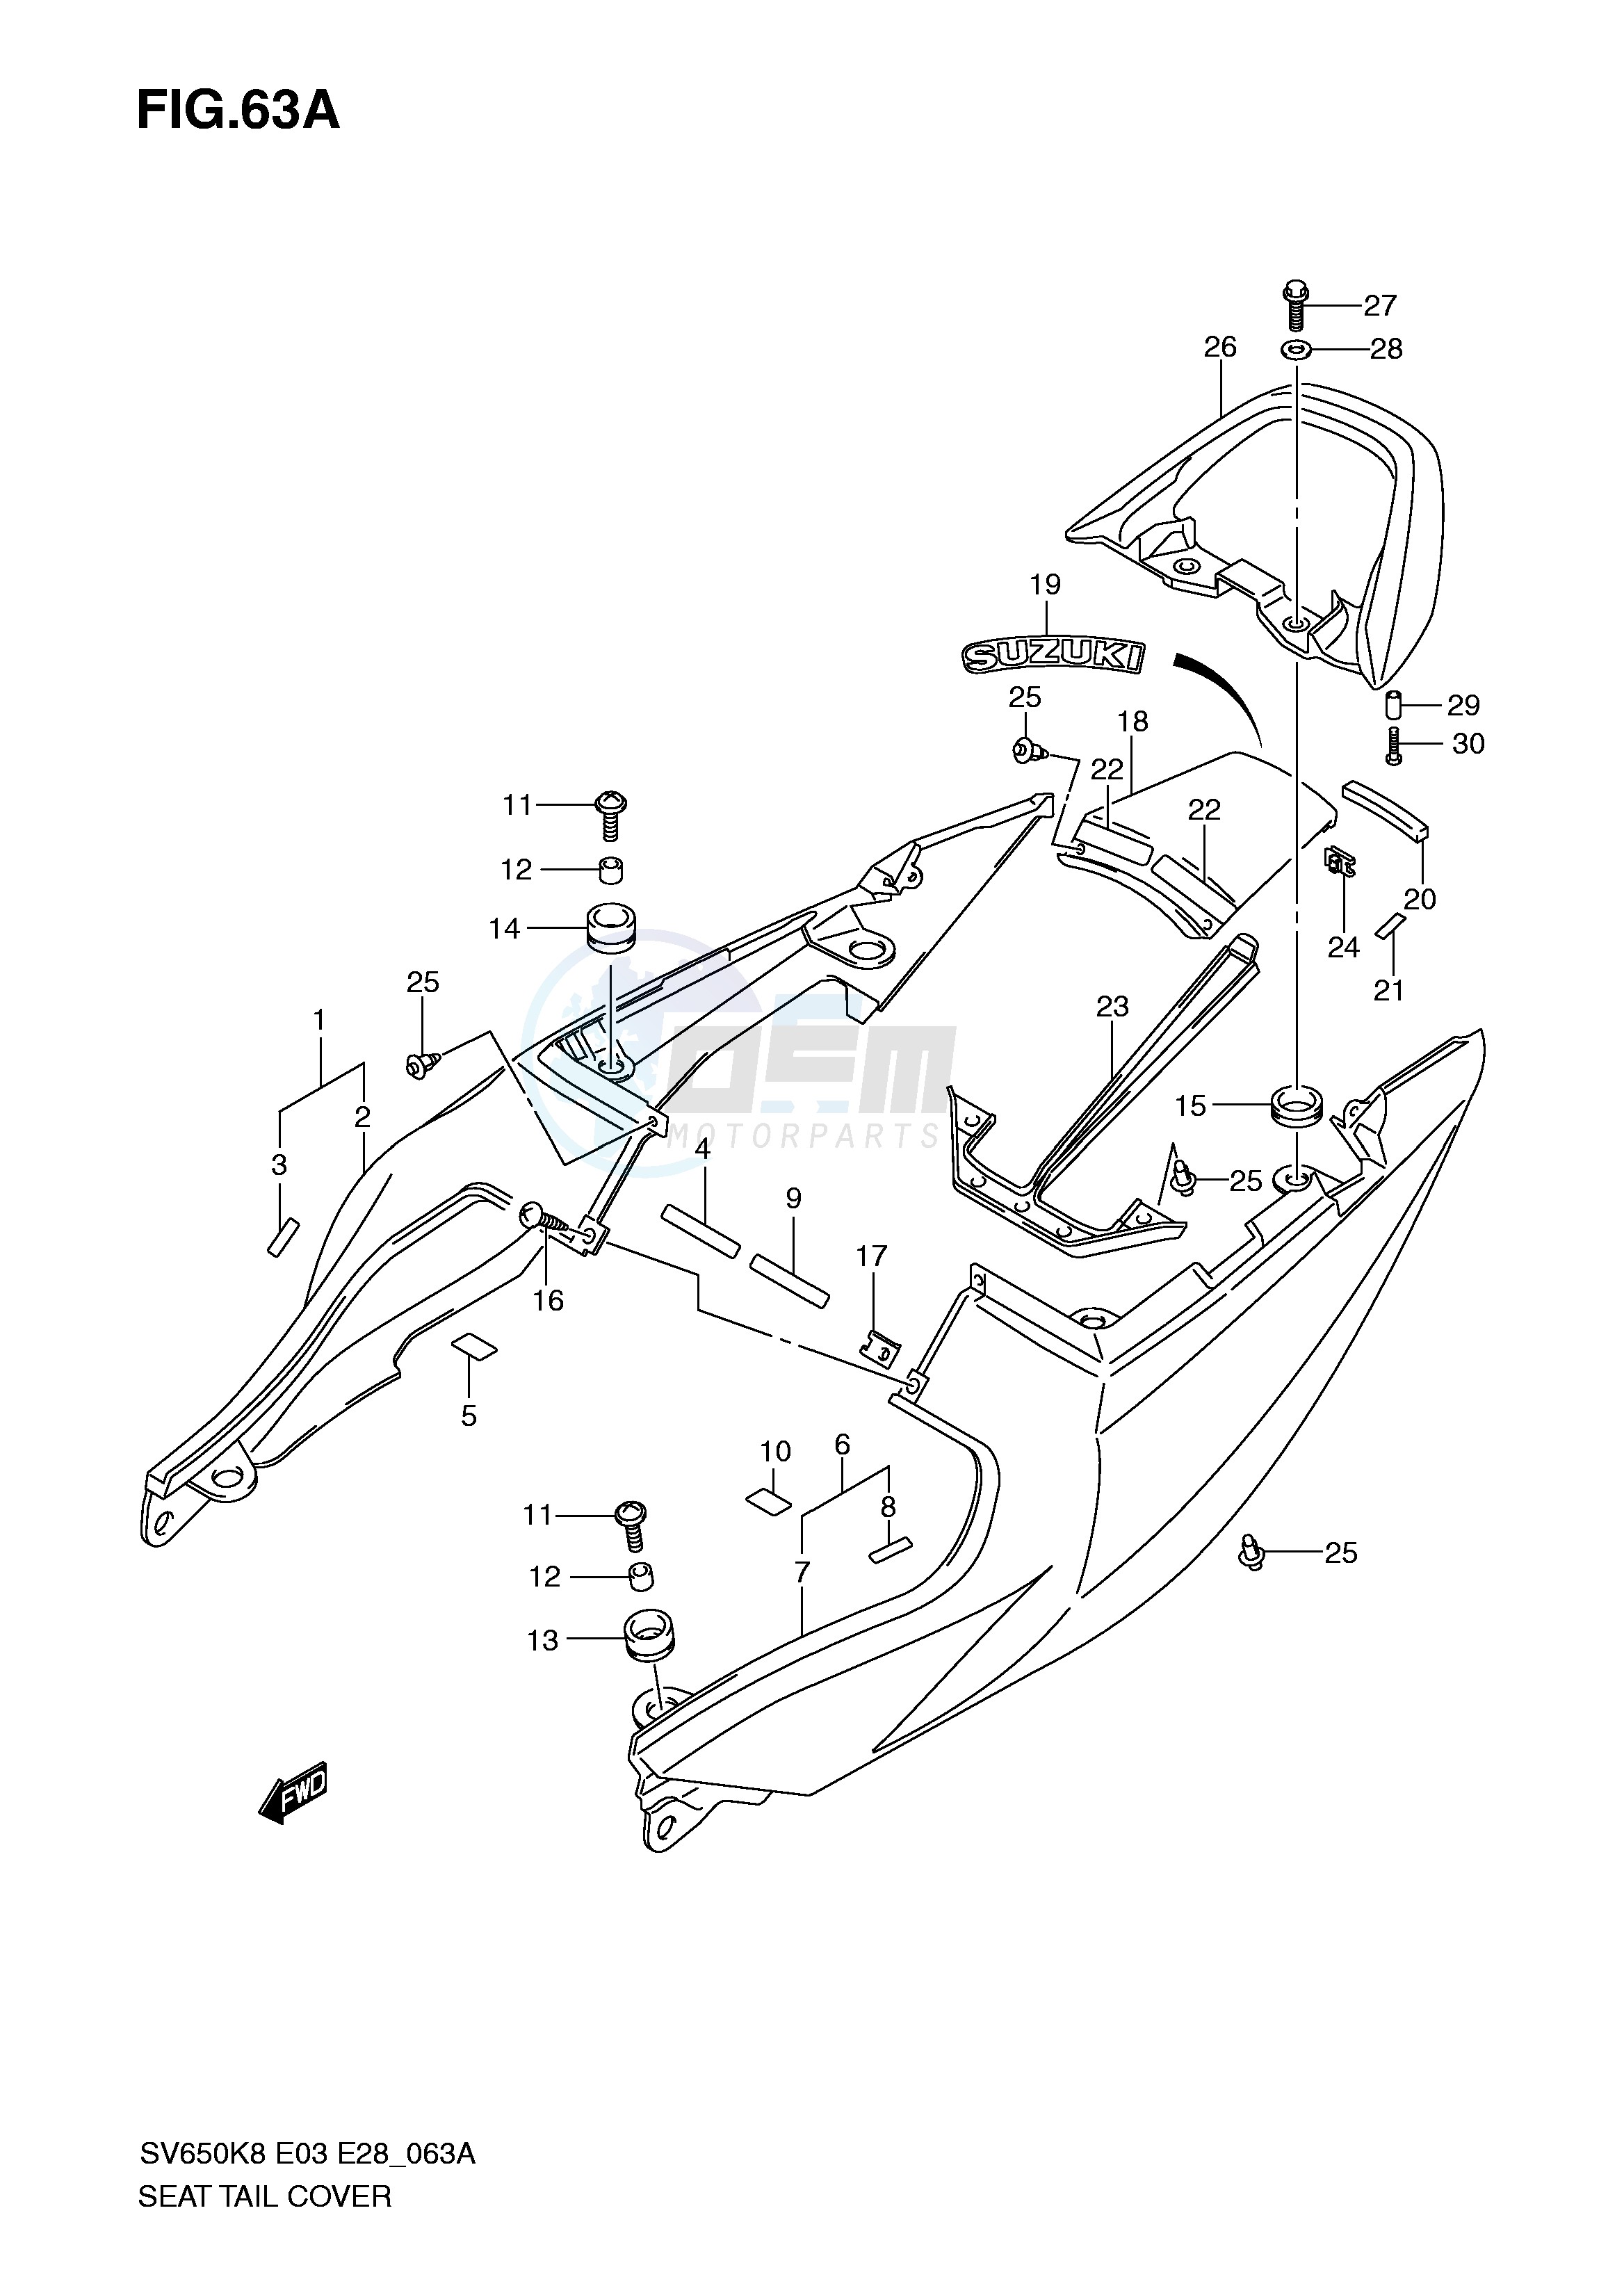 SEAT TAIL COVER (SV650SK9 SAK9) blueprint